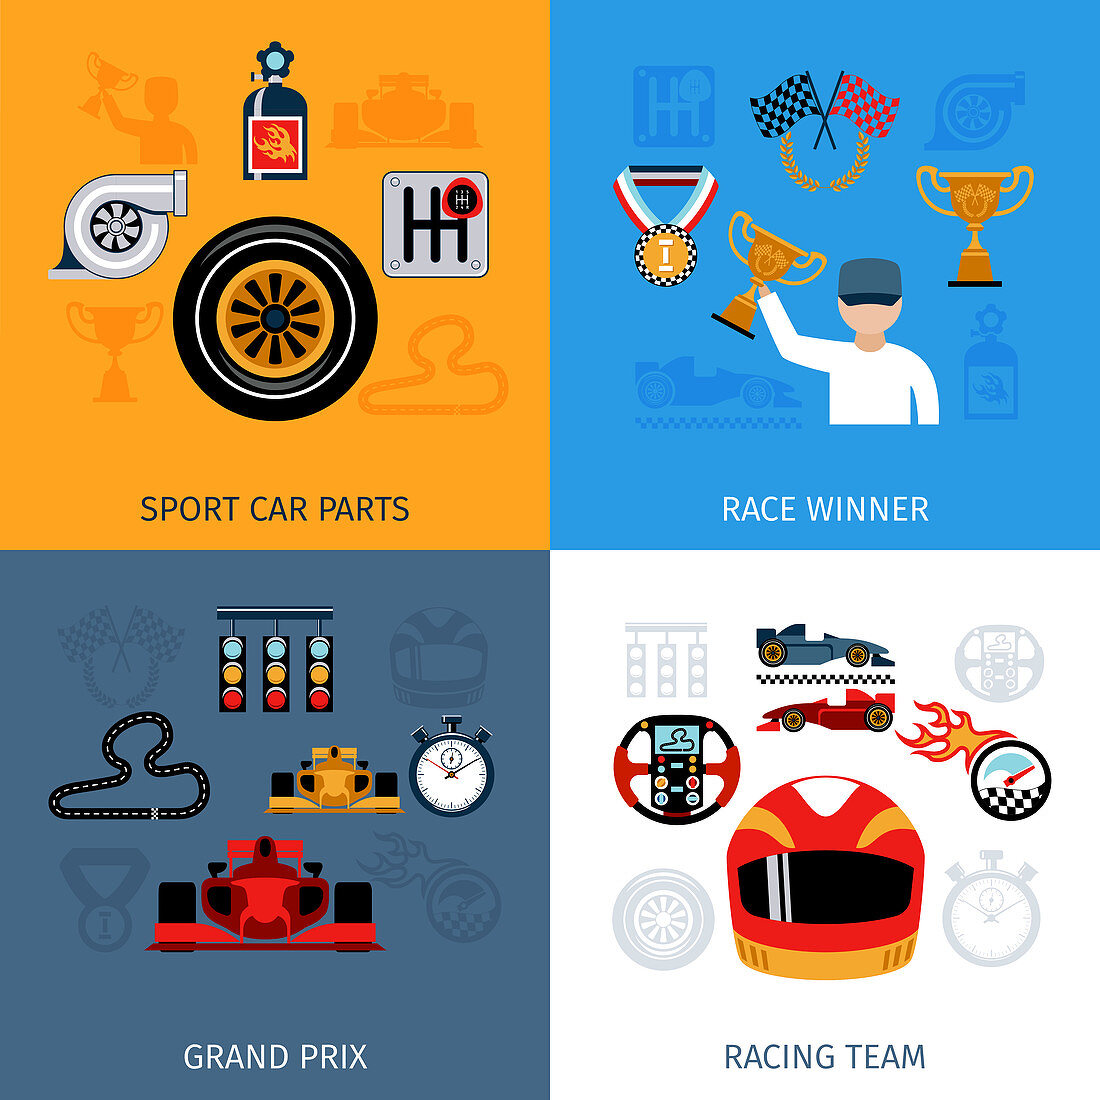 Motor racing, illustration